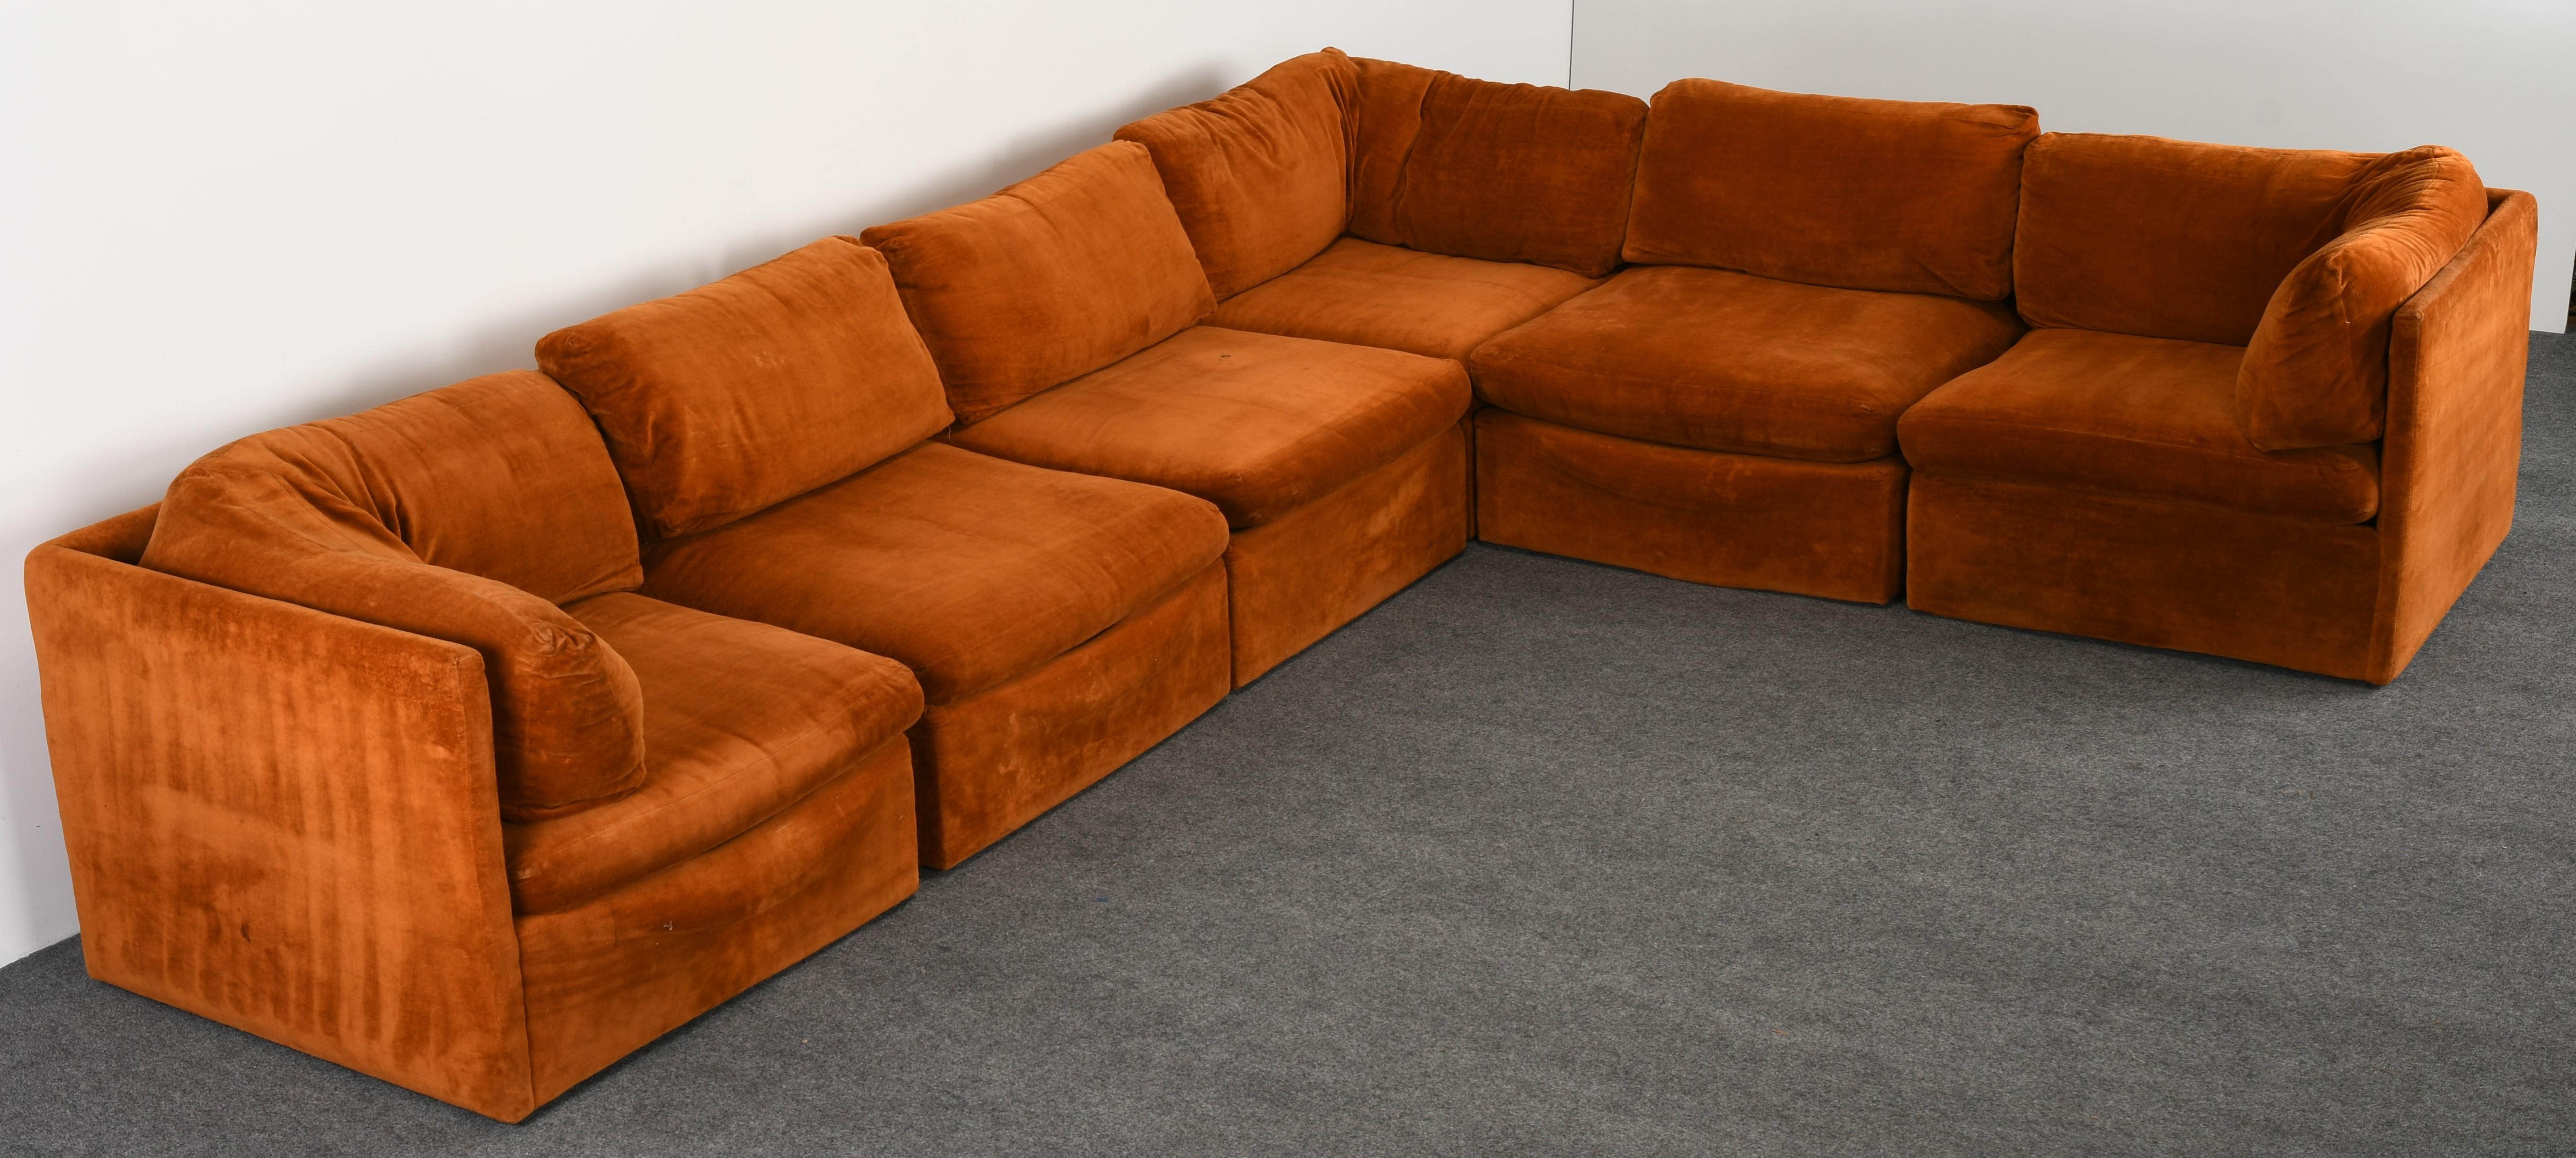 80s sectional sofa